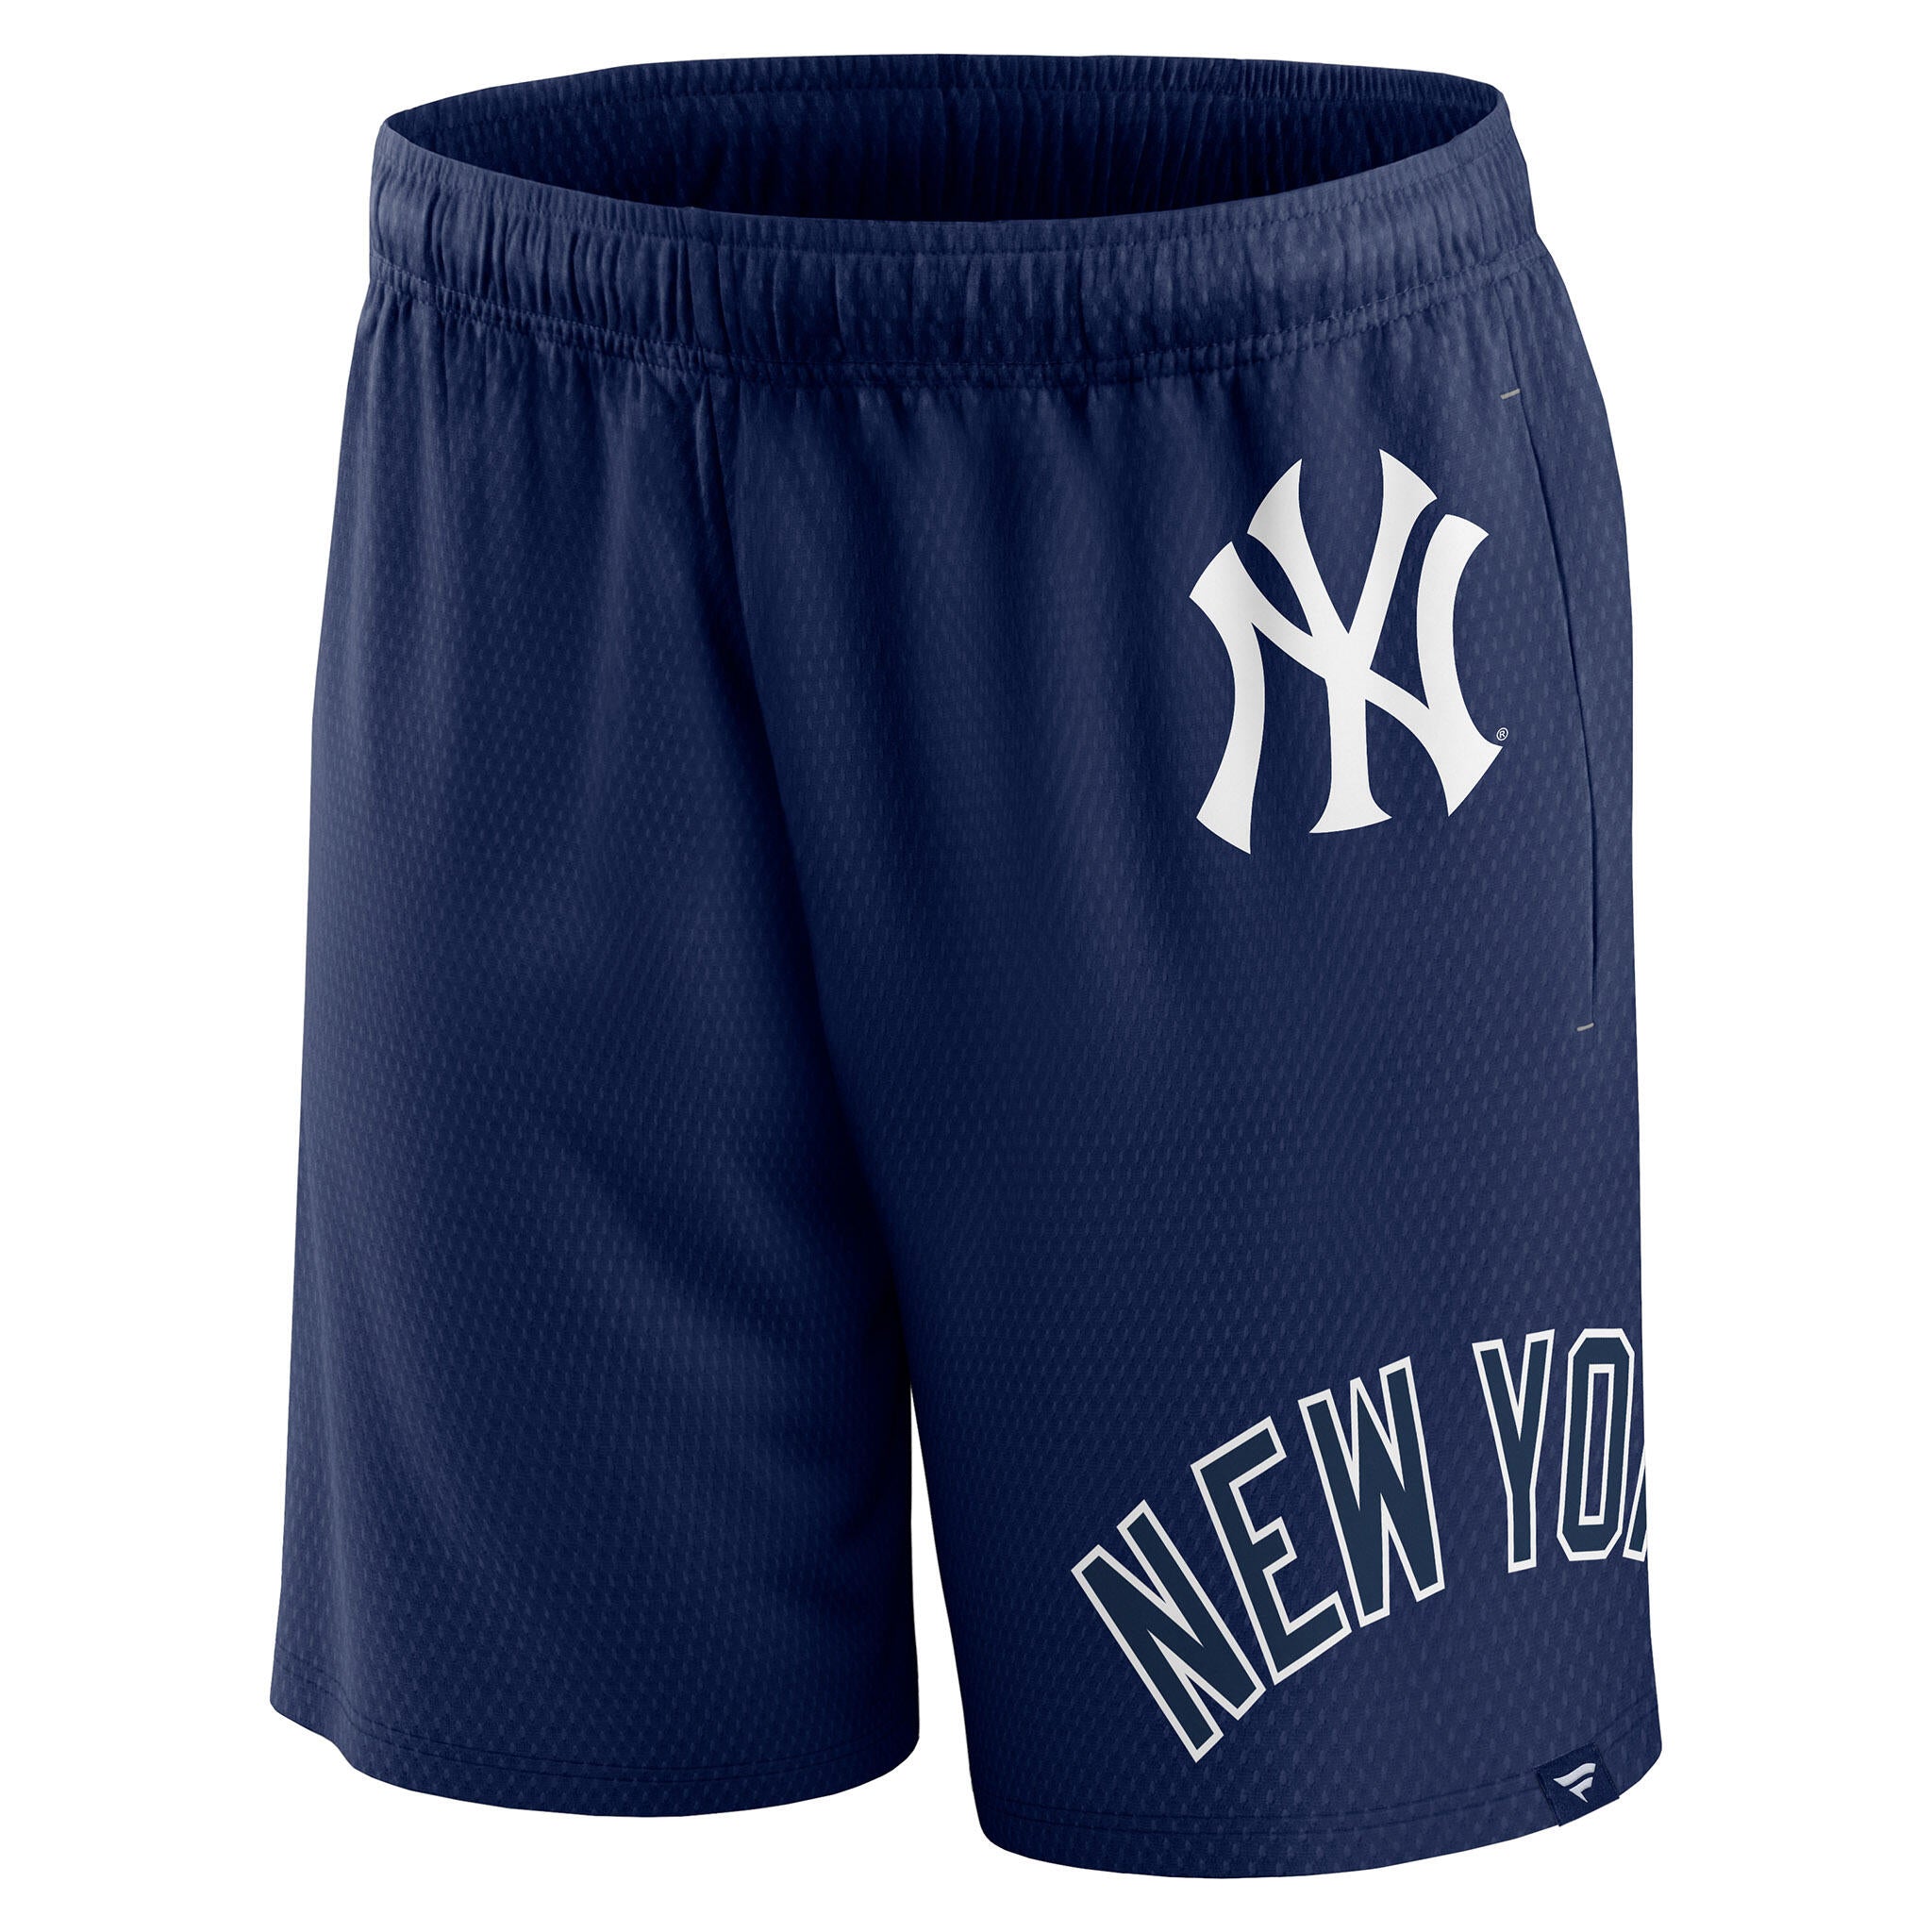 Fanatics Yankees Mesh Short | Source for Sports